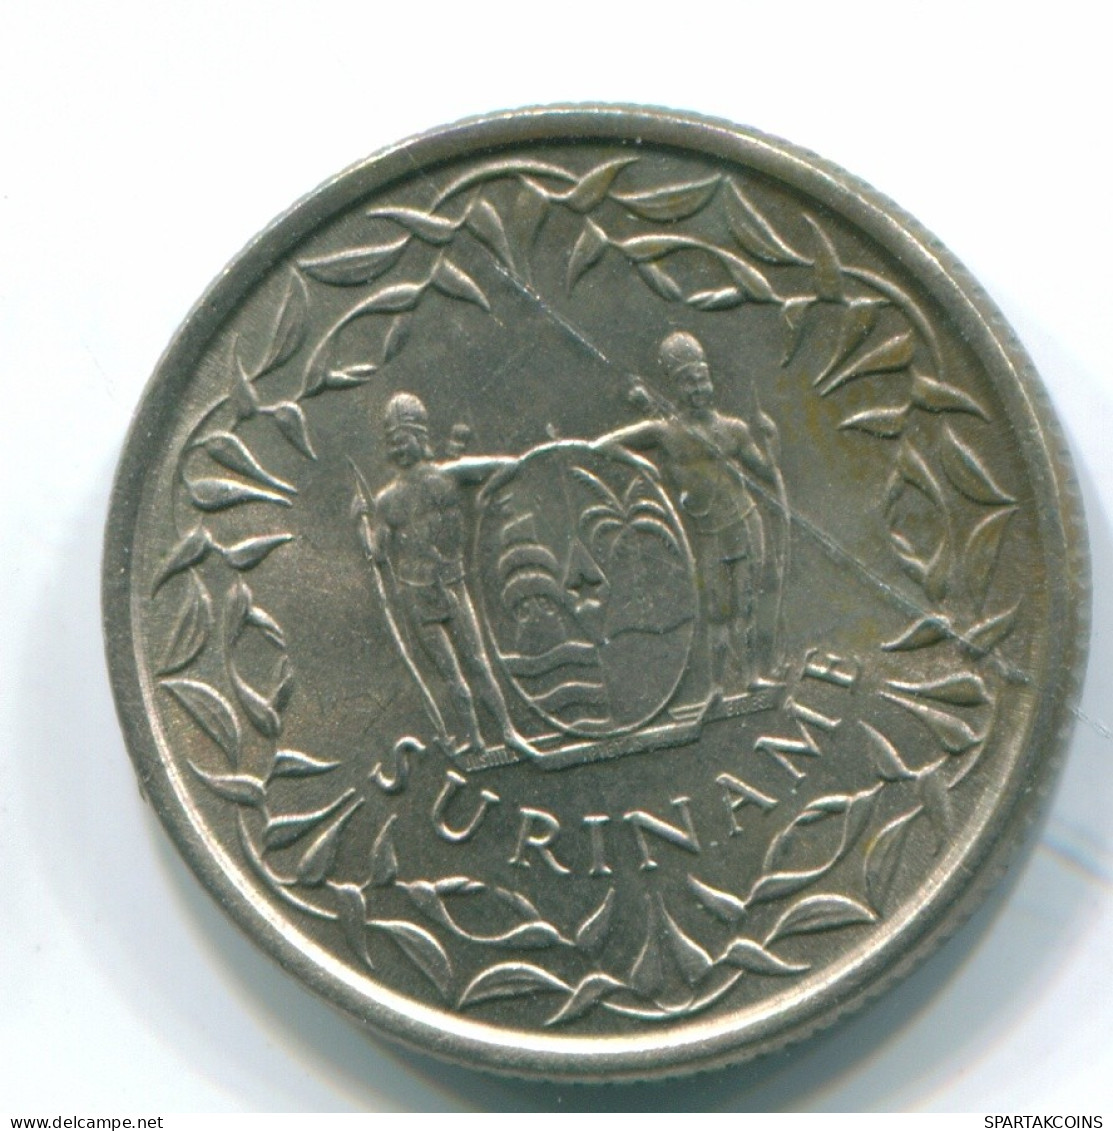 25 CENTS 1974 SURINAME NEERLANDÉS NETHERLANDS Nickel Colonial Moneda #S11233.E.A - Suriname 1975 - ...